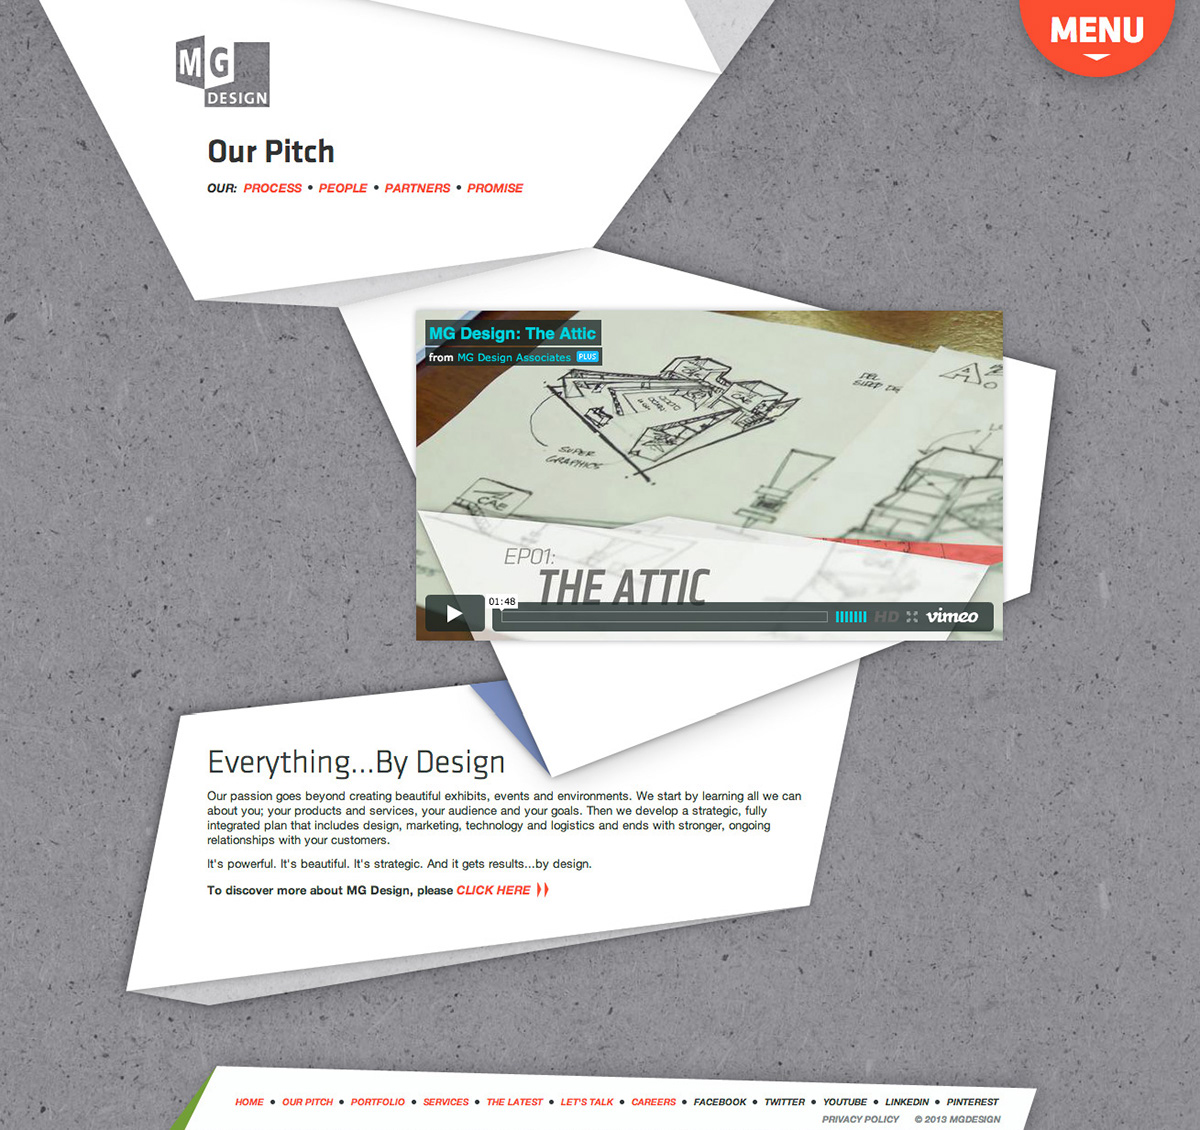 MG Design EXHIBIT DESIGN MG Design website MGDesign Bell Award MG Design BMA